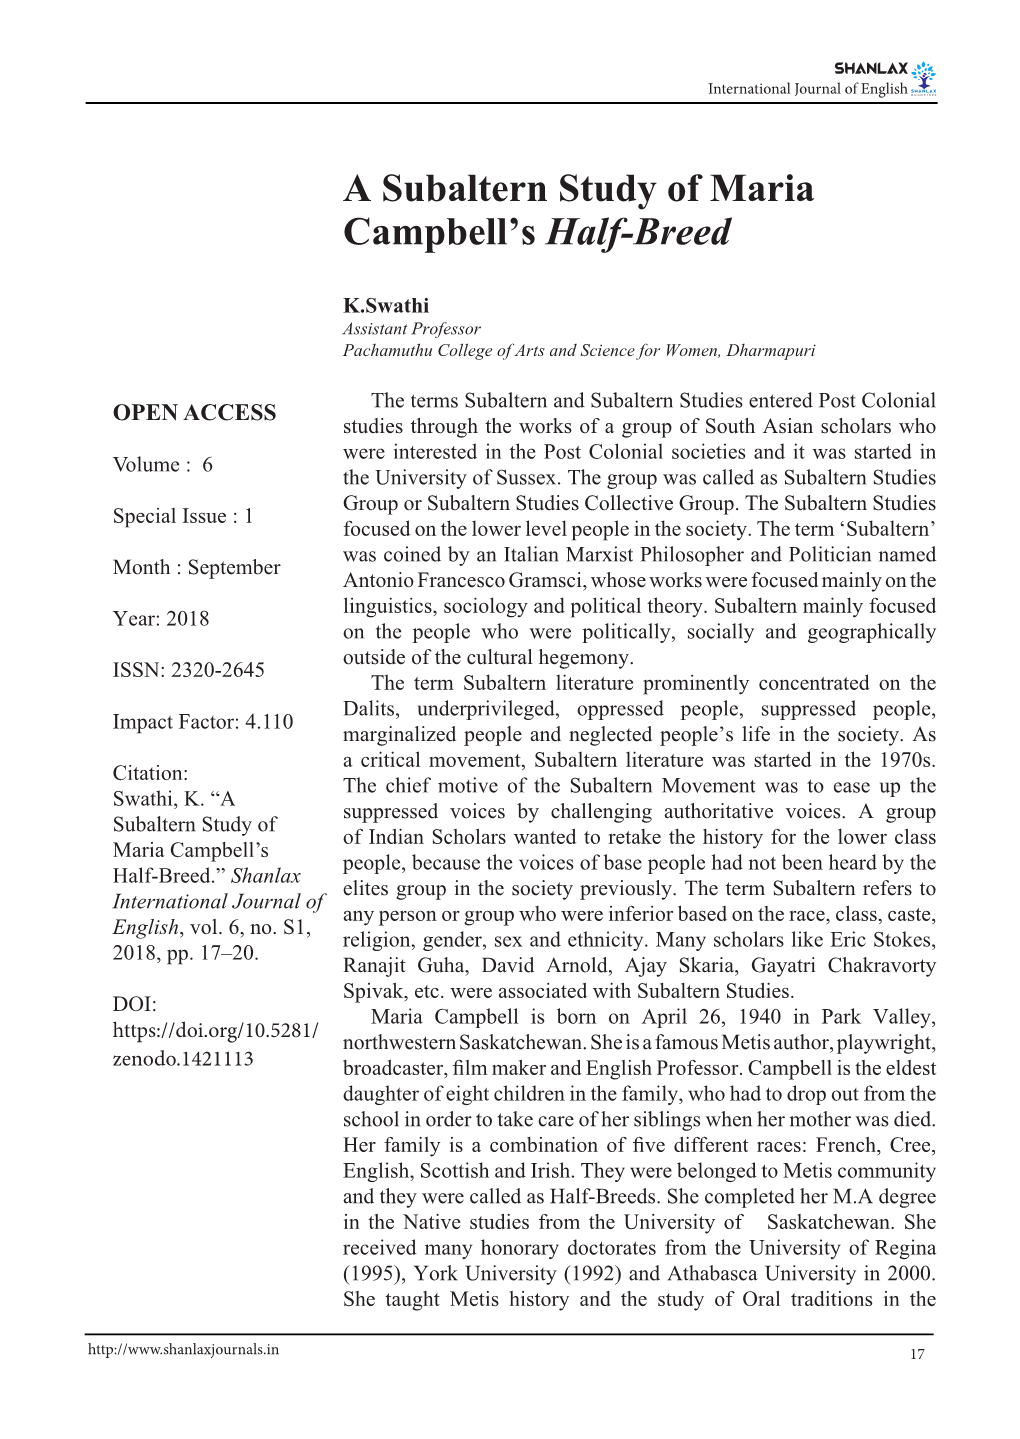 A Subaltern Study of Maria Campbell's Half-Breed